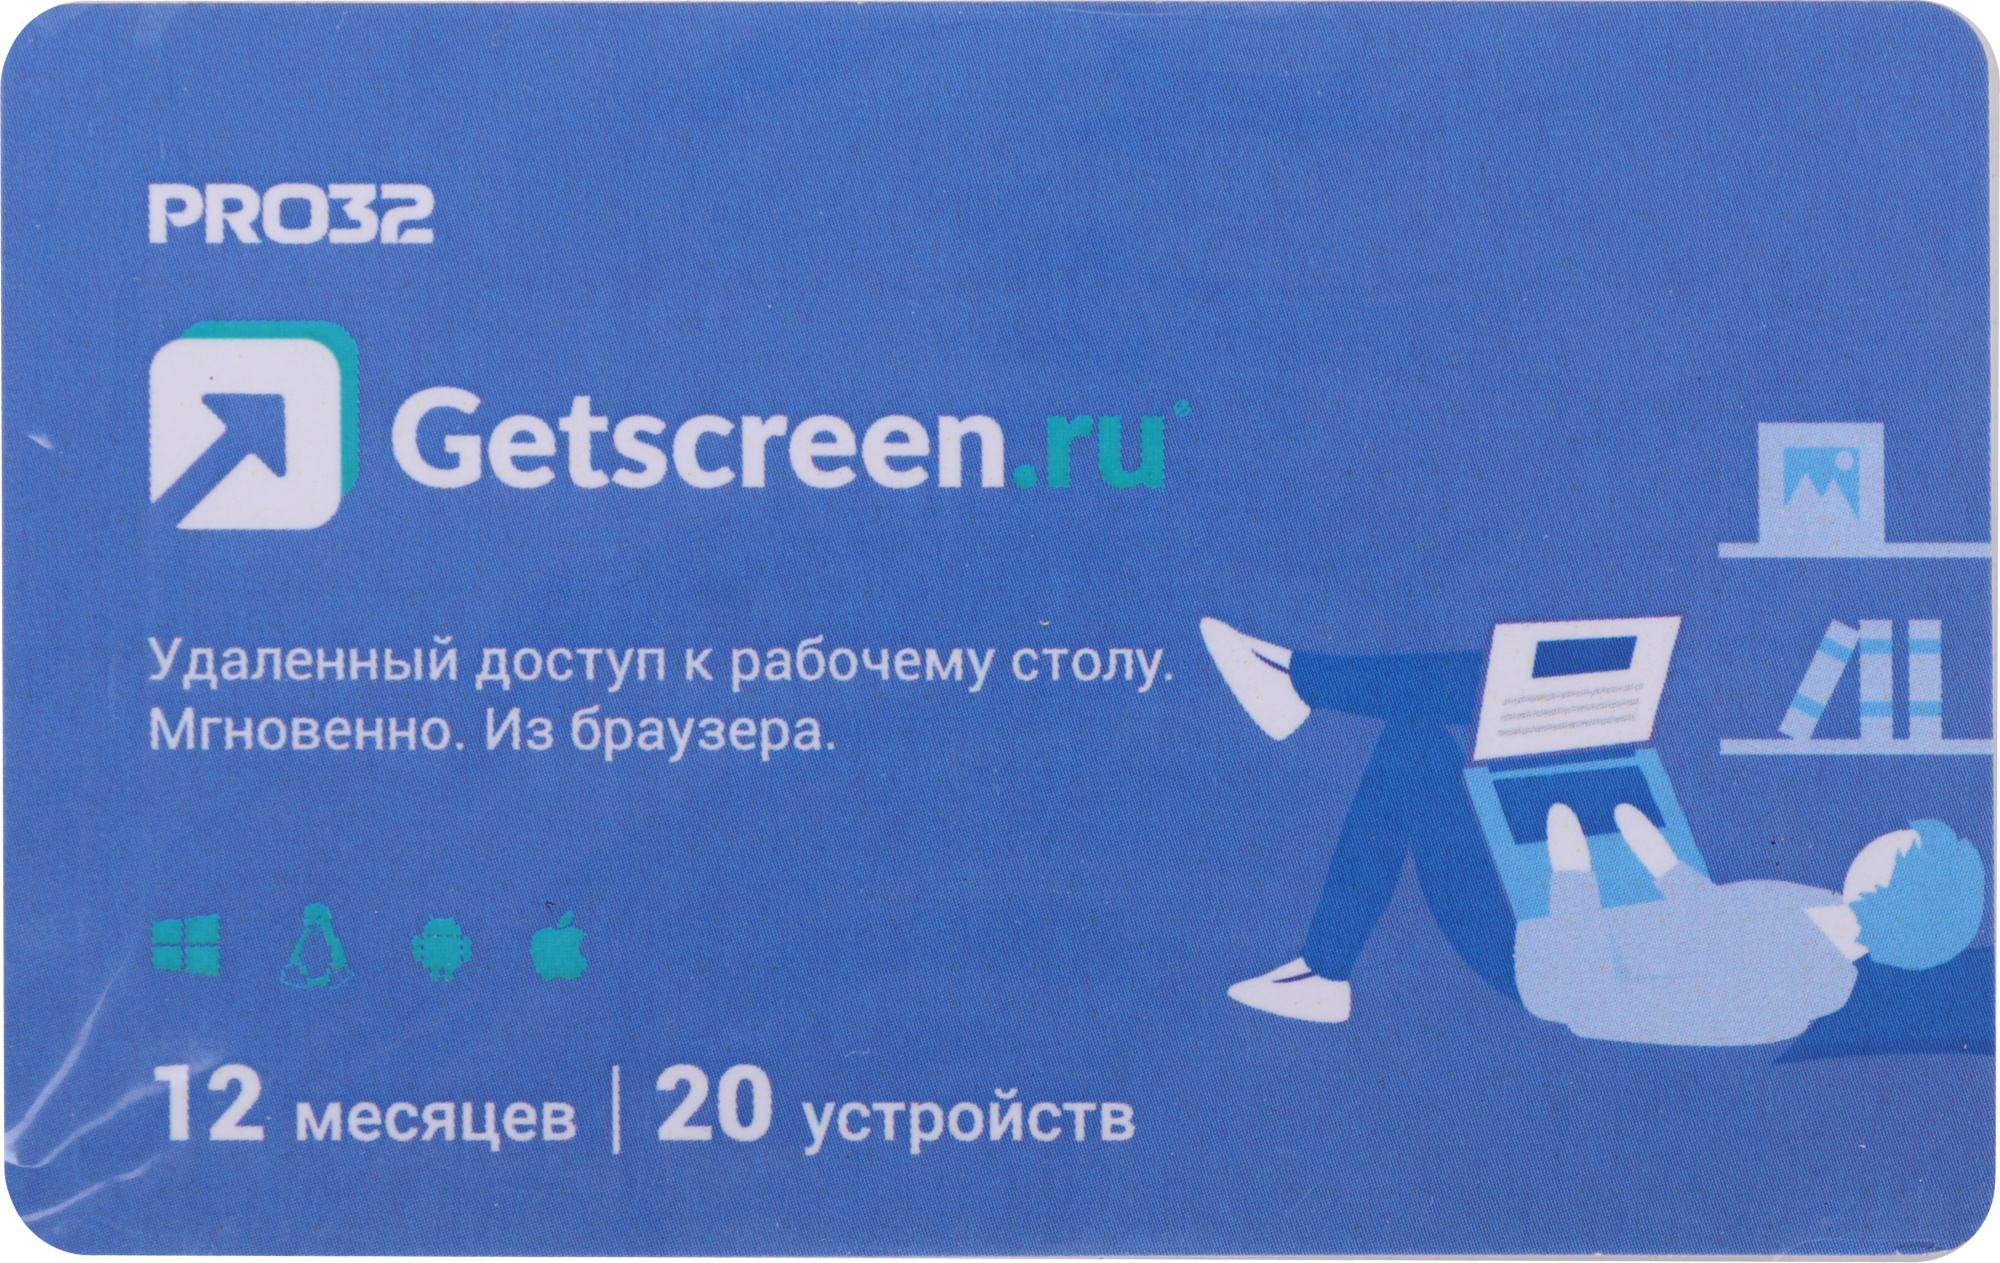 ПО PRO32 GetScreen SOHO 2 оператора 20 устройств 1год (PRO32-RDCS-NS(CARD2)-1-20)